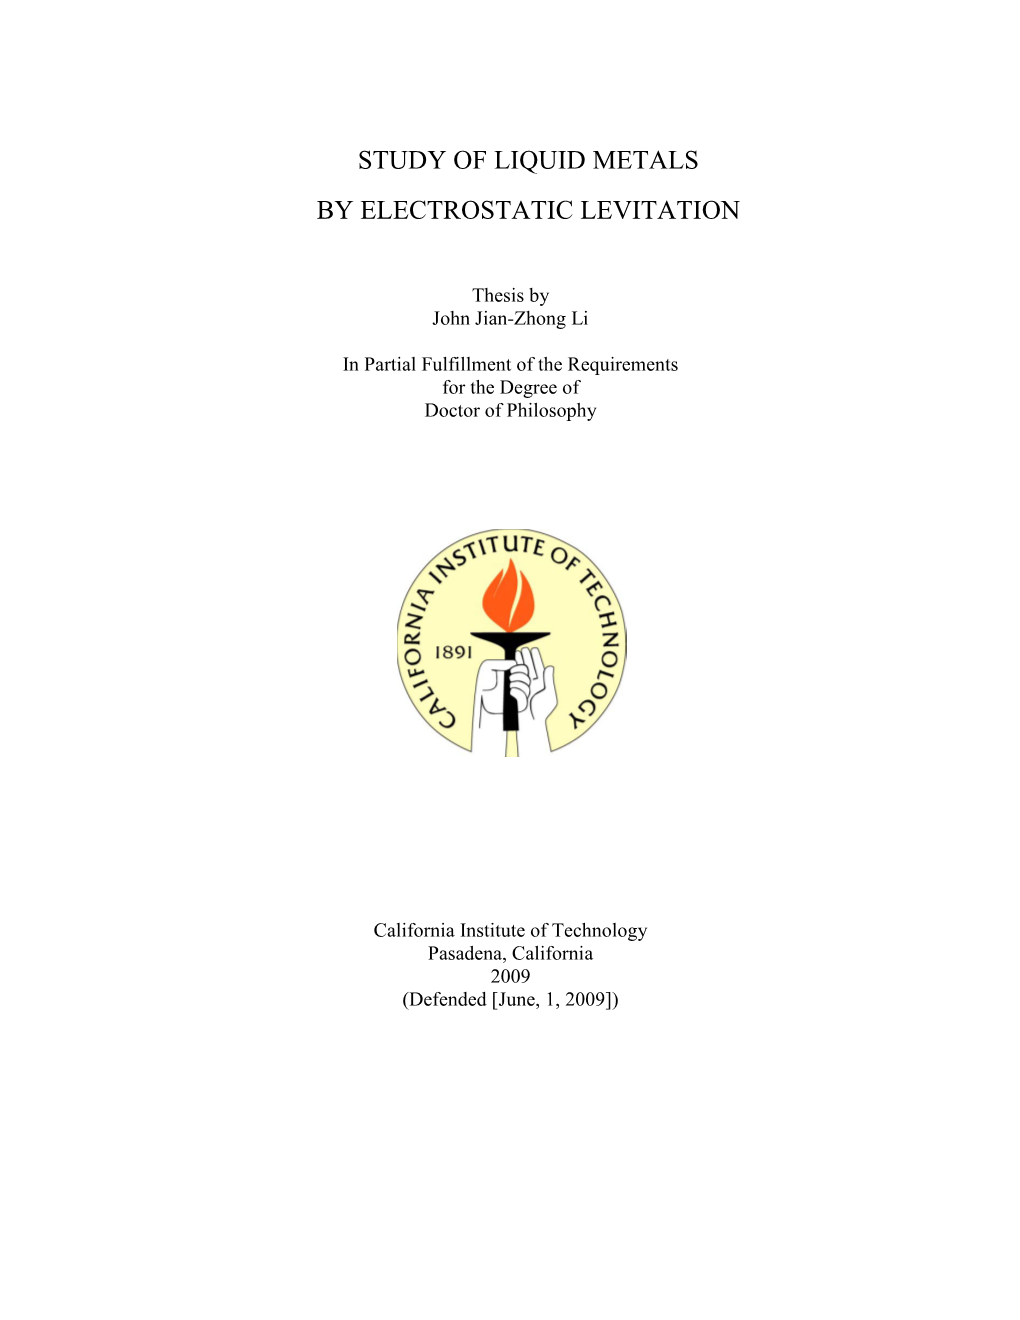 Study of Liquid Metals by Electrostatic Levitation